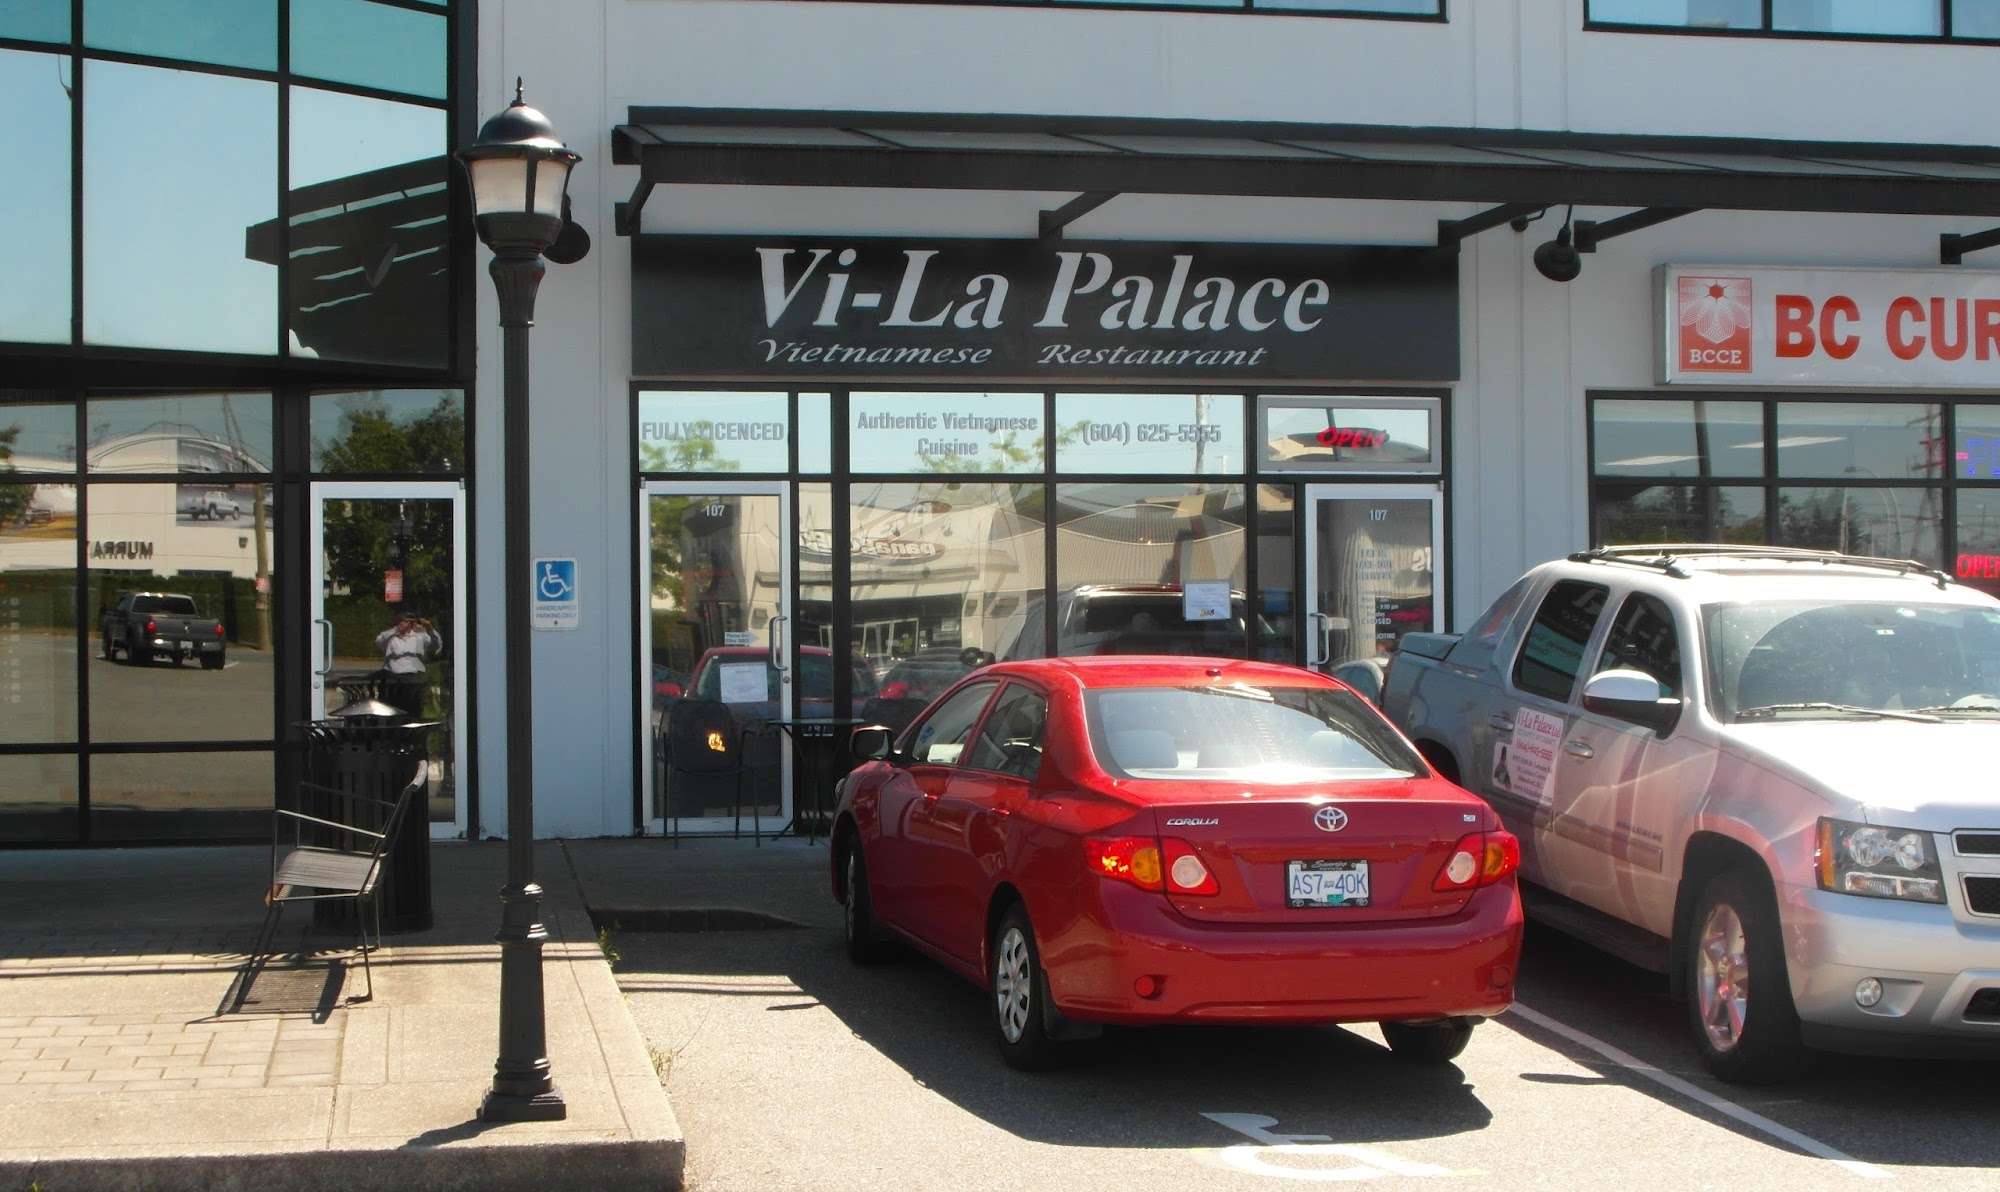 Vi-La Palace Vietnamese Restaurant Ltd